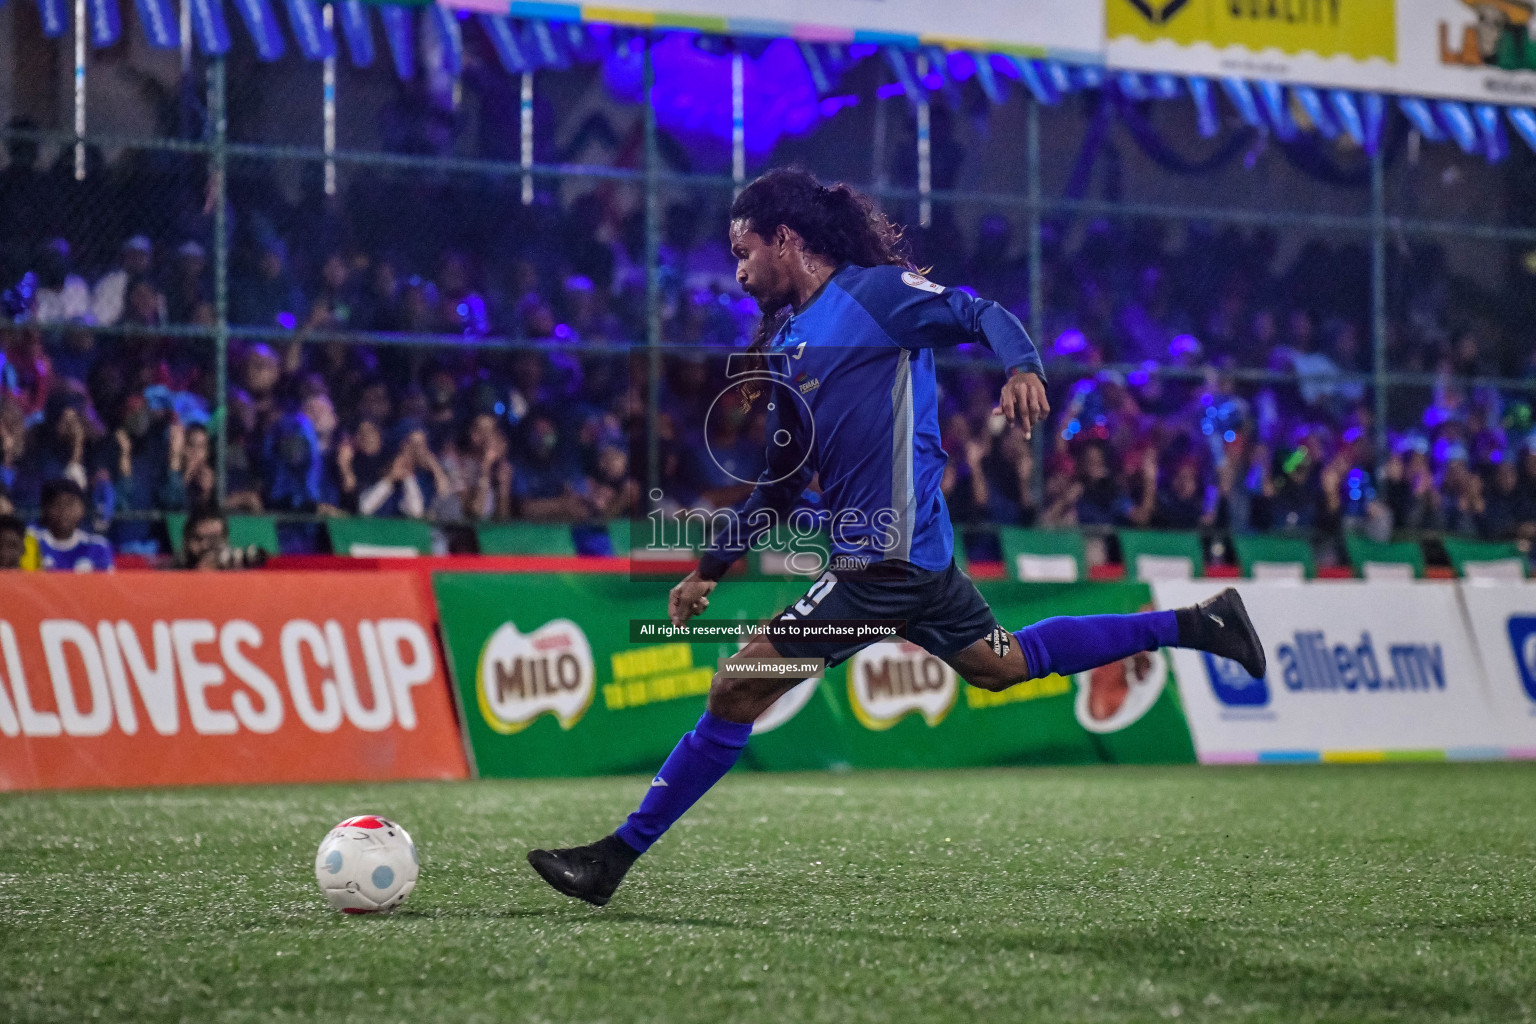 Team Fenaka vs MPL in the Finals of Club Maldives 2022 was held in Hulhumale', Maldives on Saturday, 5th November 2022. Photos: Nausham Waheed / images.mv